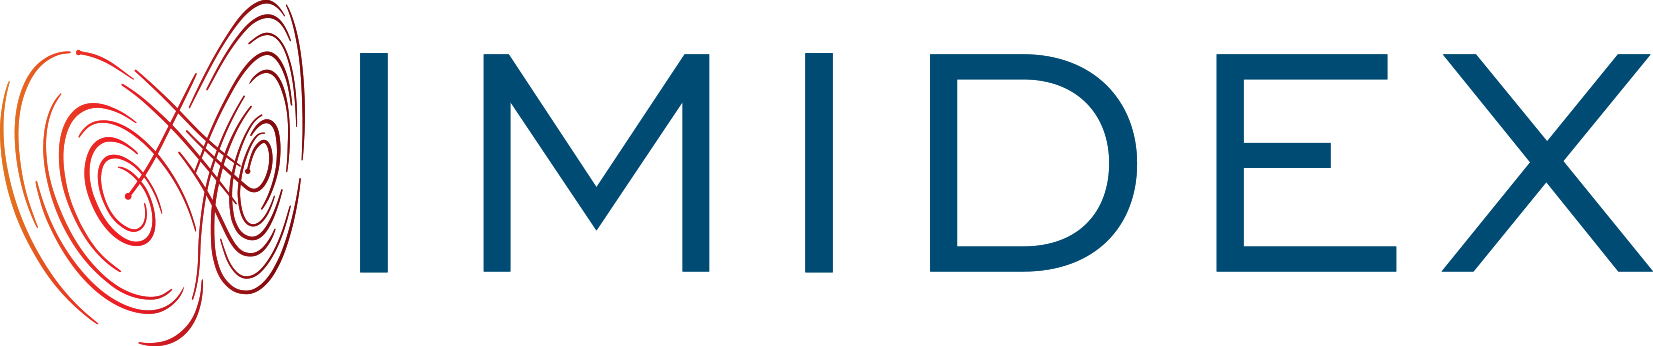 IMIDEX_Logo_NoTag_LG.jpg